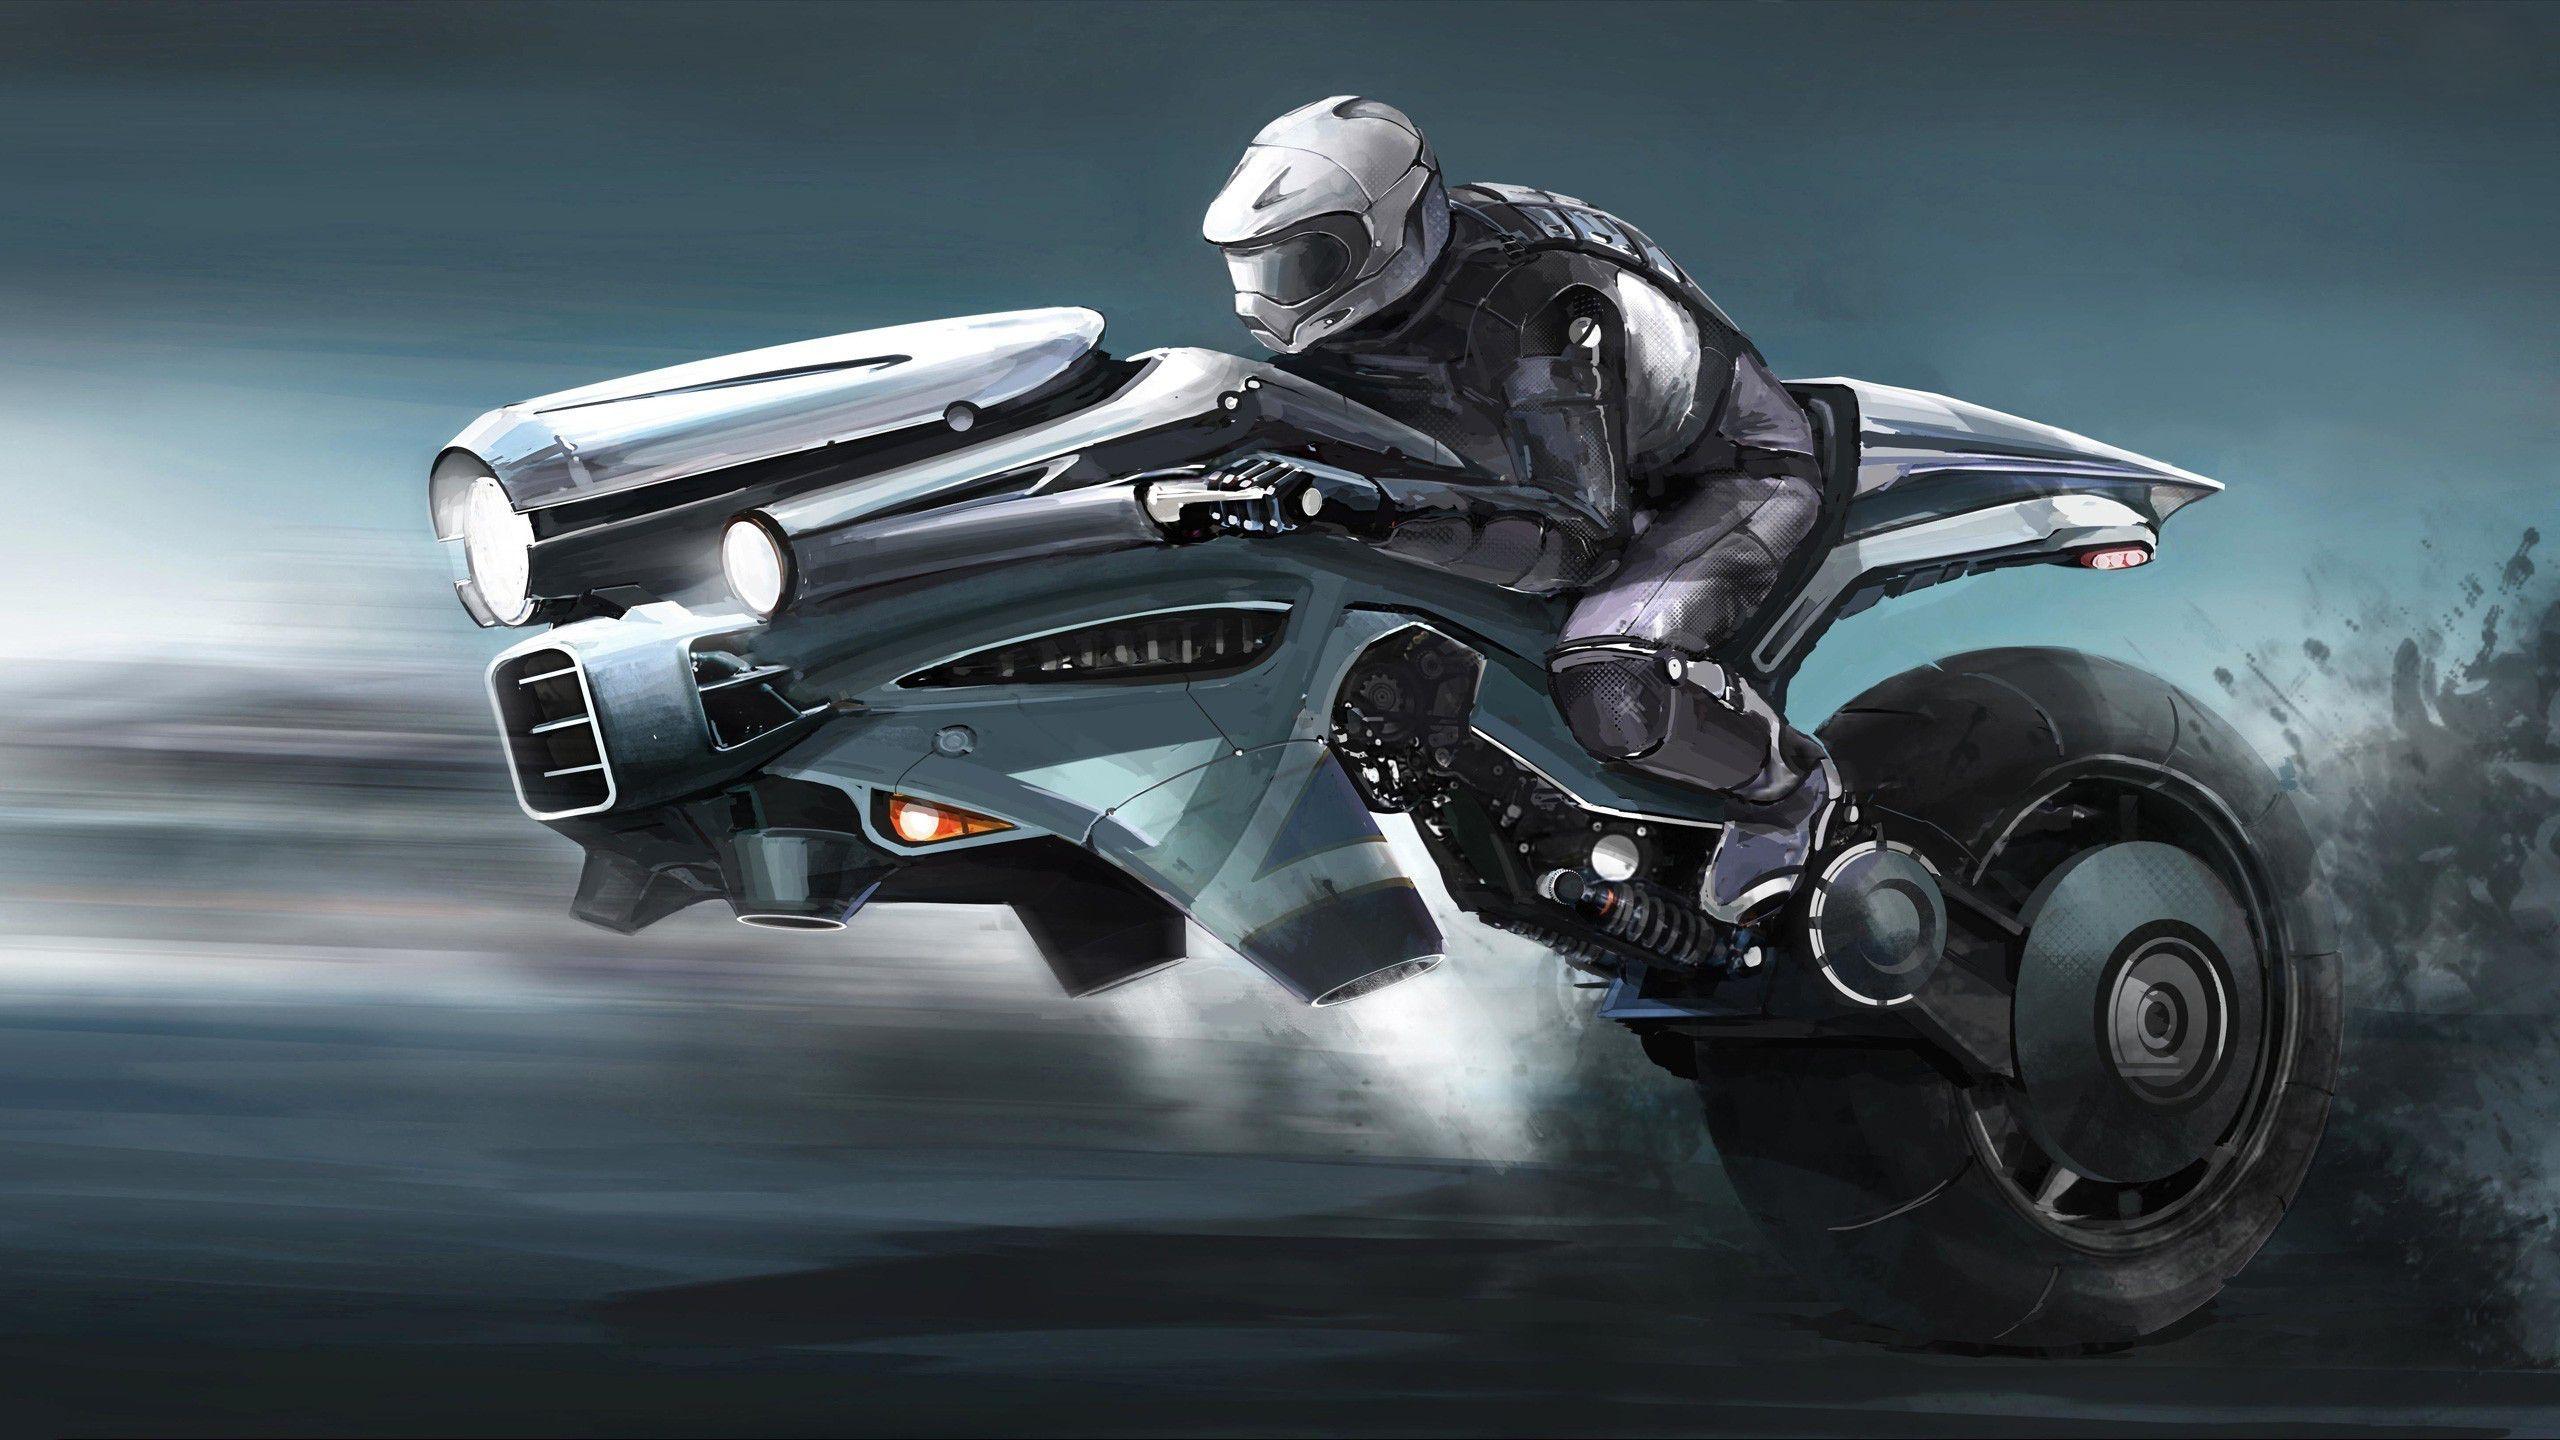 Sci Fi Motorcycle Wallpaper Free Sci Fi Motorcycle Background